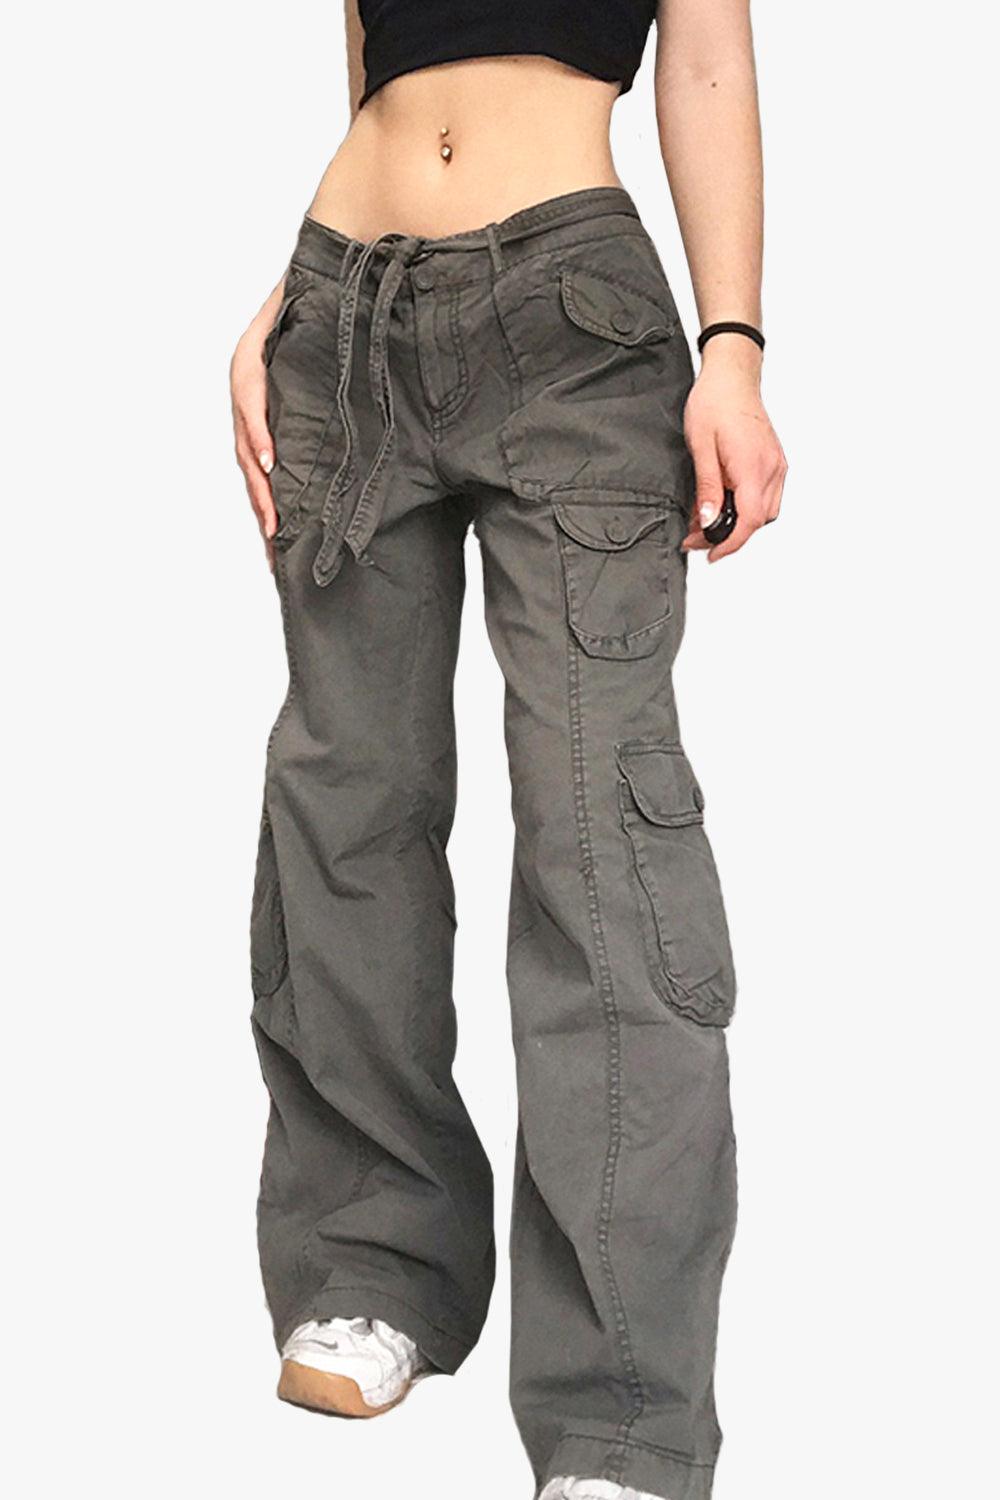 Alt Girl Multi Pocket Gray Wide Pants - Aesthetic Clothes Shop